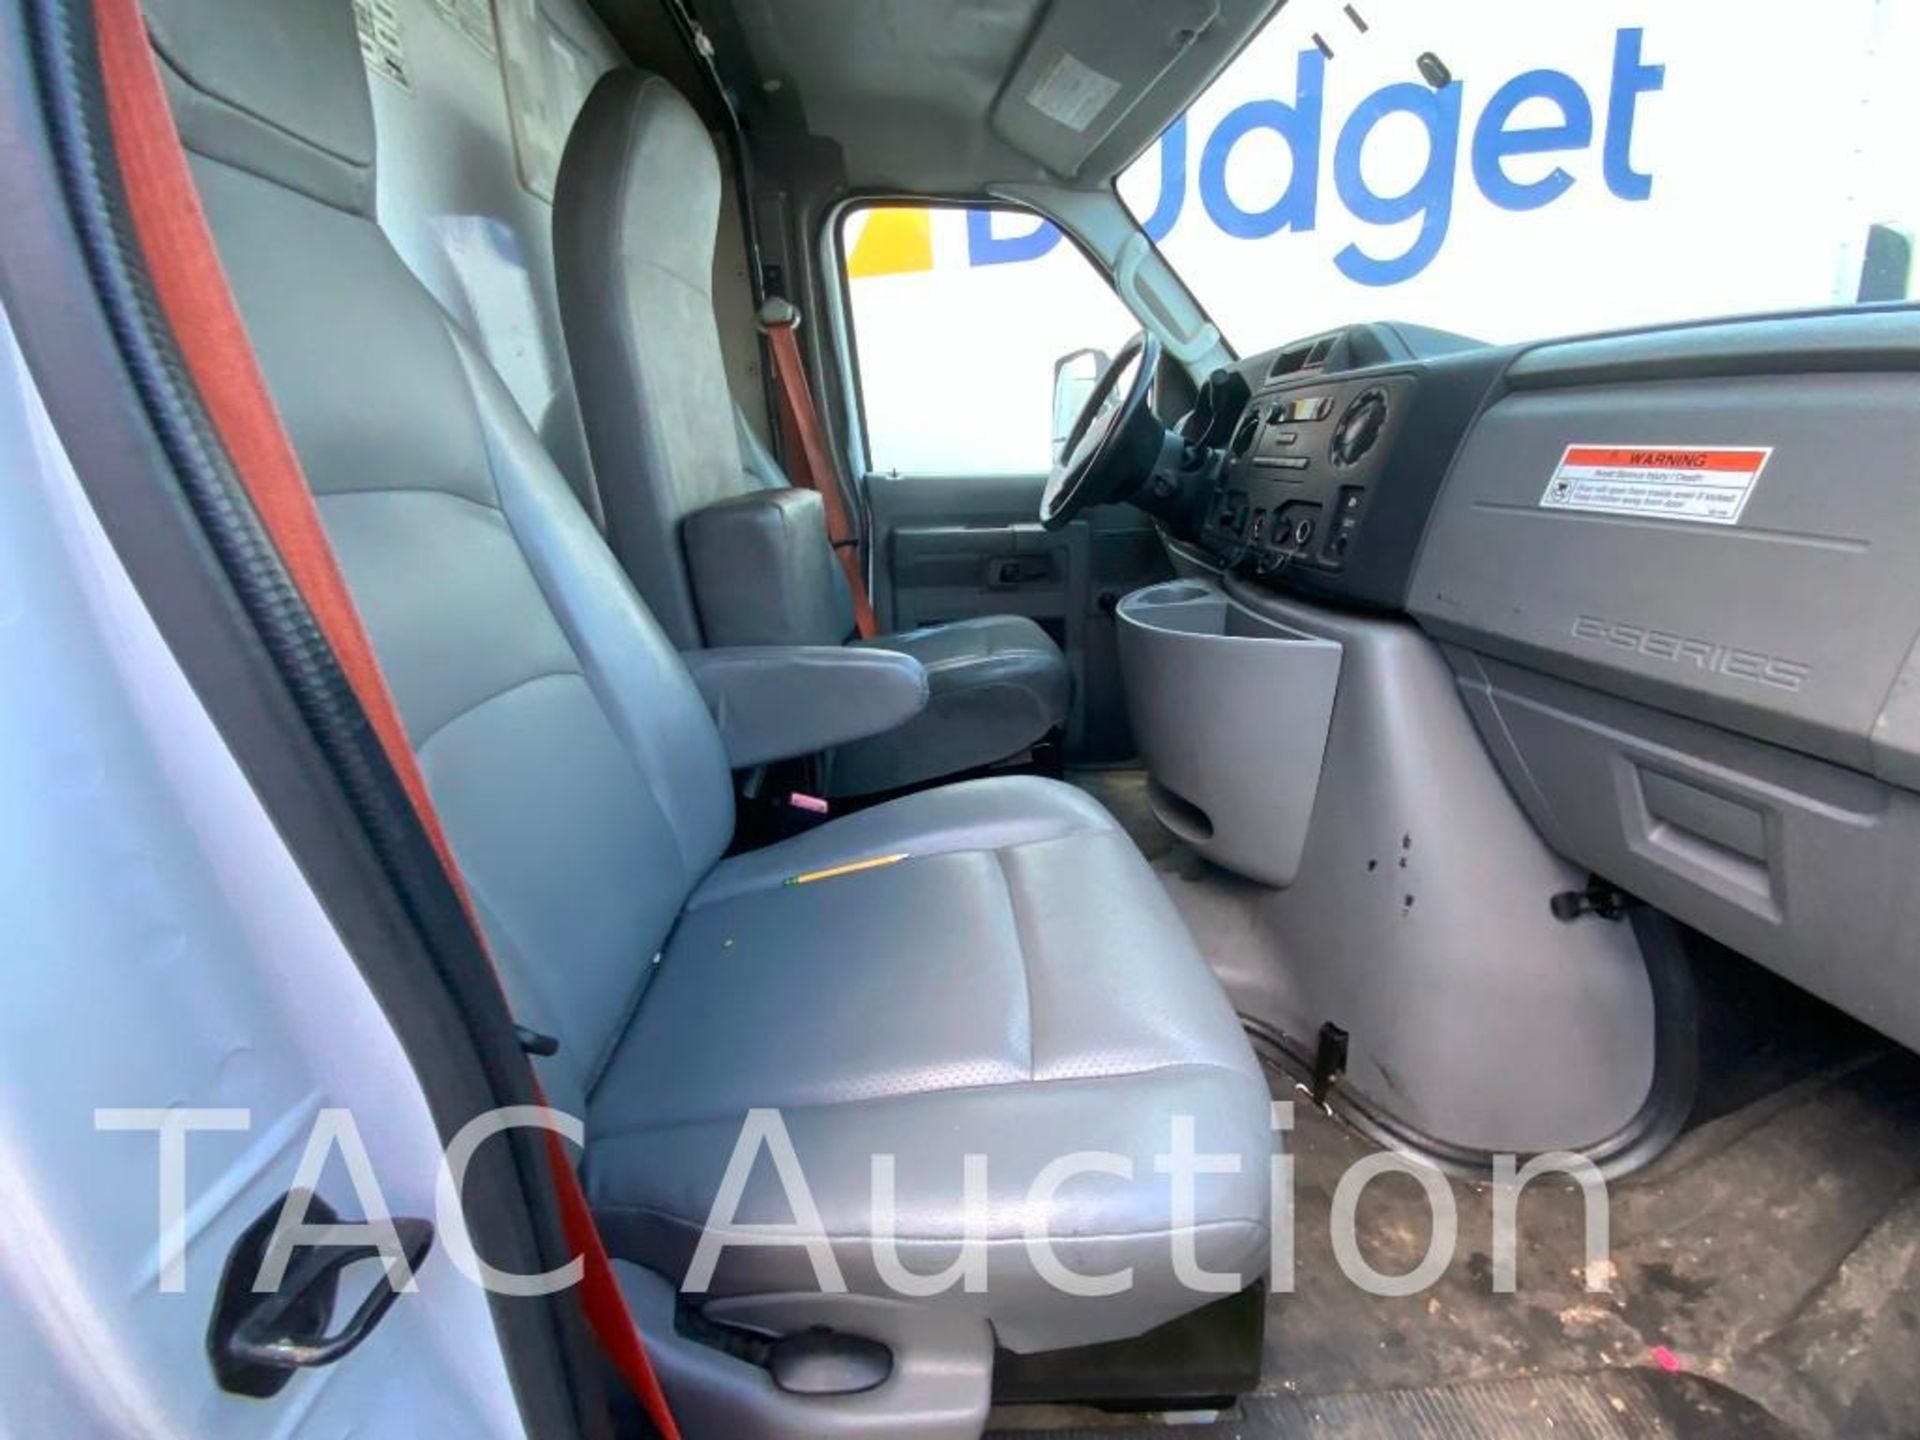 2014 Ford E-350 Cutaway Van - Image 16 of 53